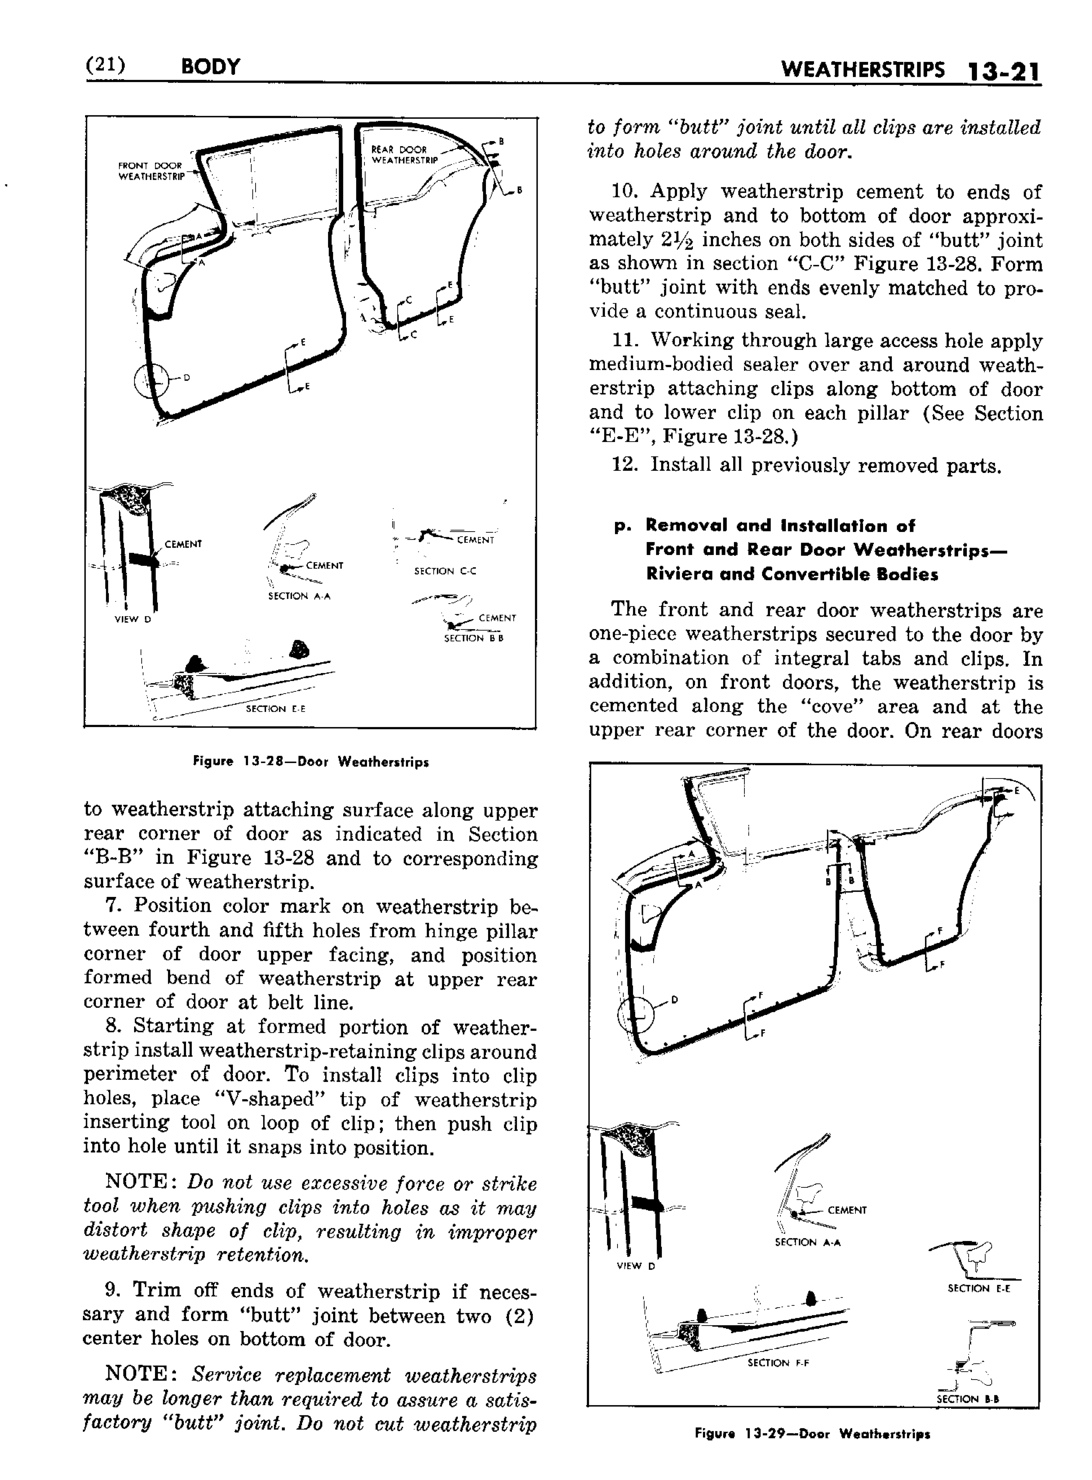 n_1958 Buick Body Service Manual-022-022.jpg